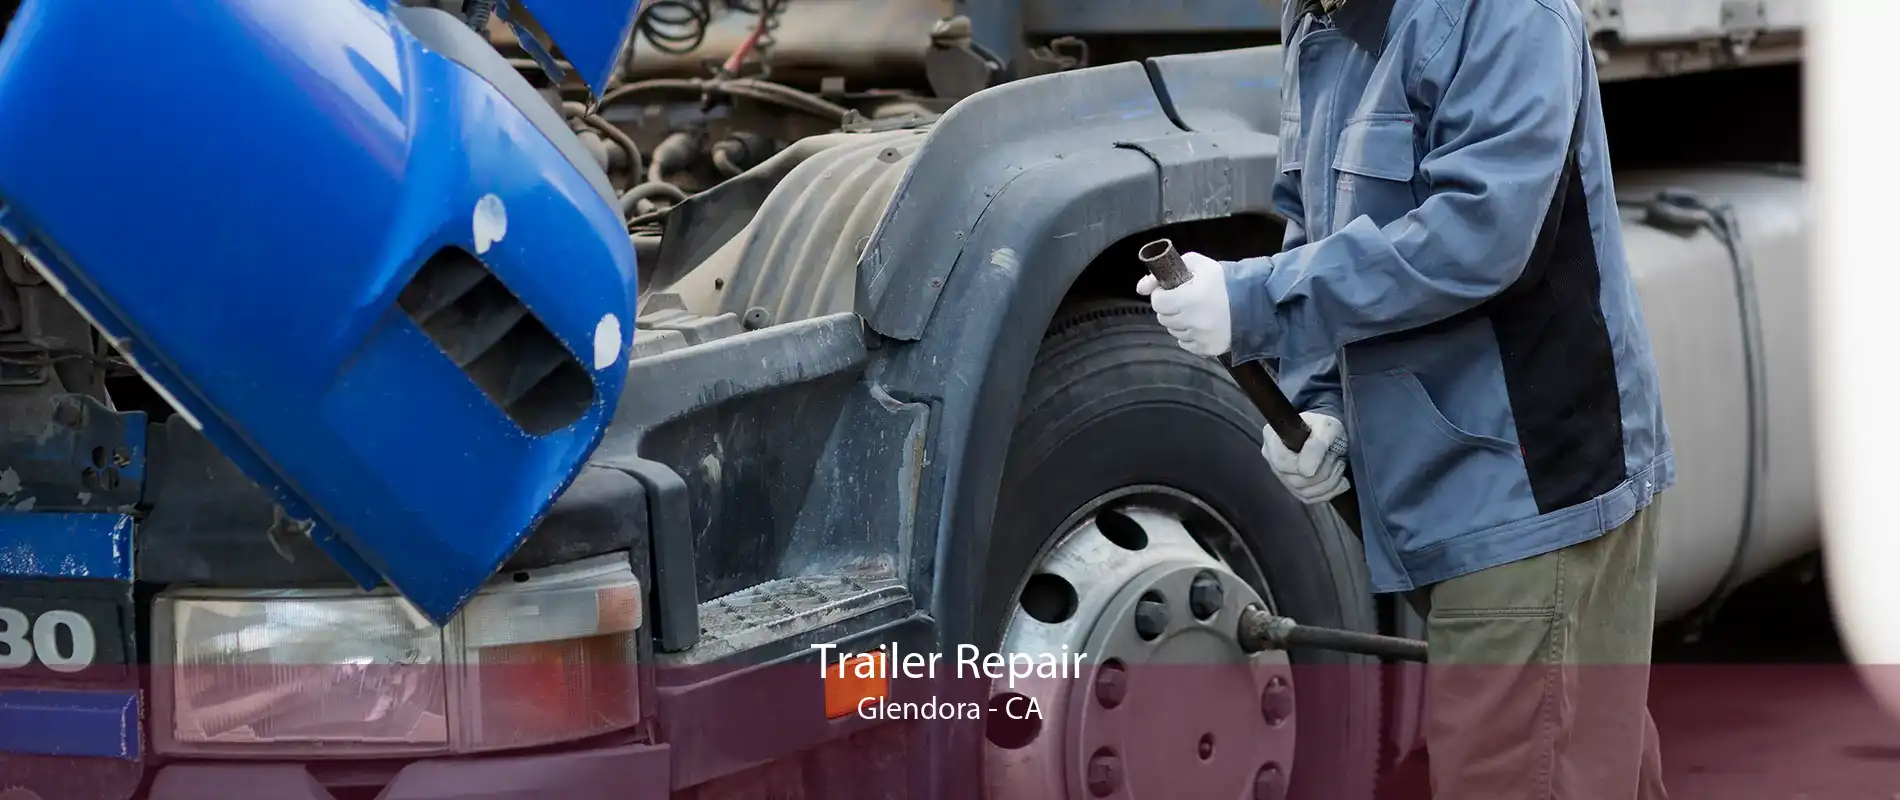 Trailer Repair Glendora - CA